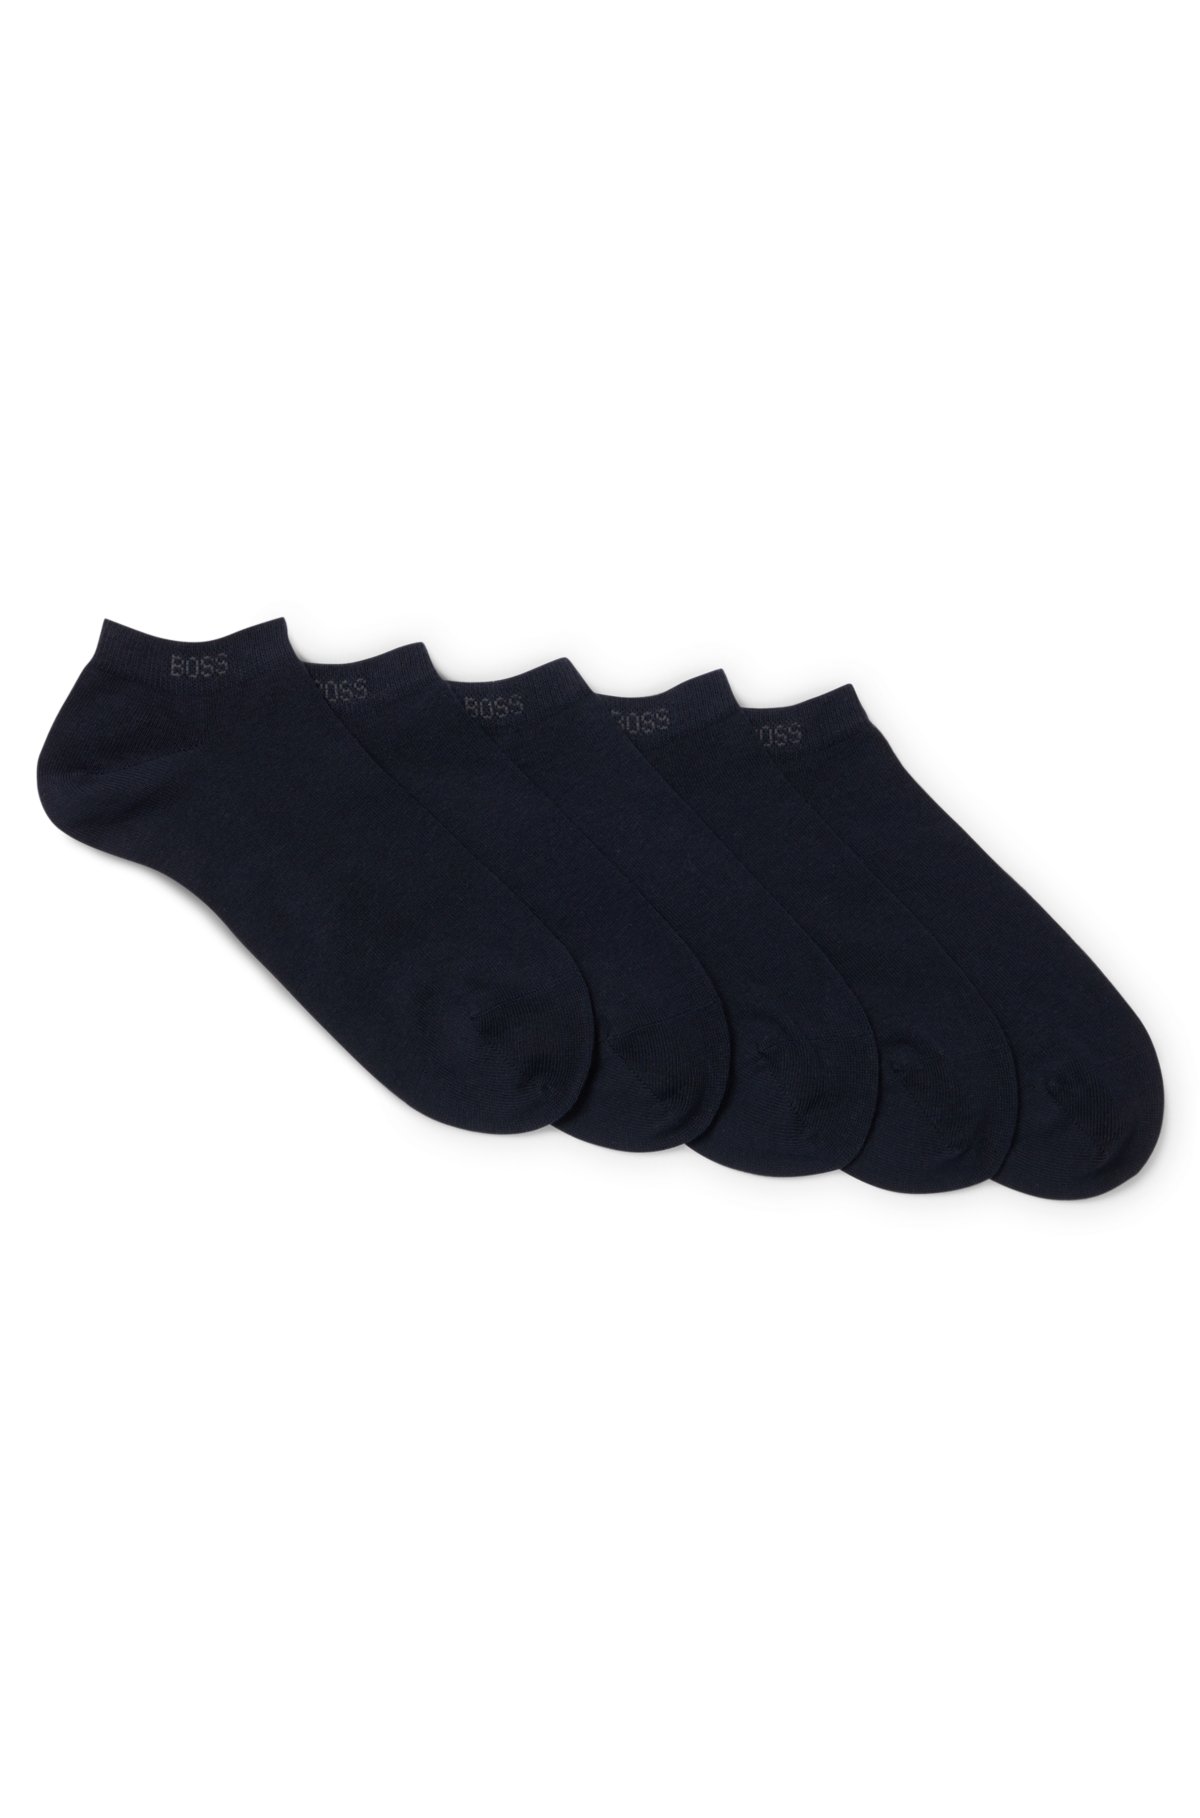 Pack de 5 pares de calcetines tobilleros combinados - Calcetines